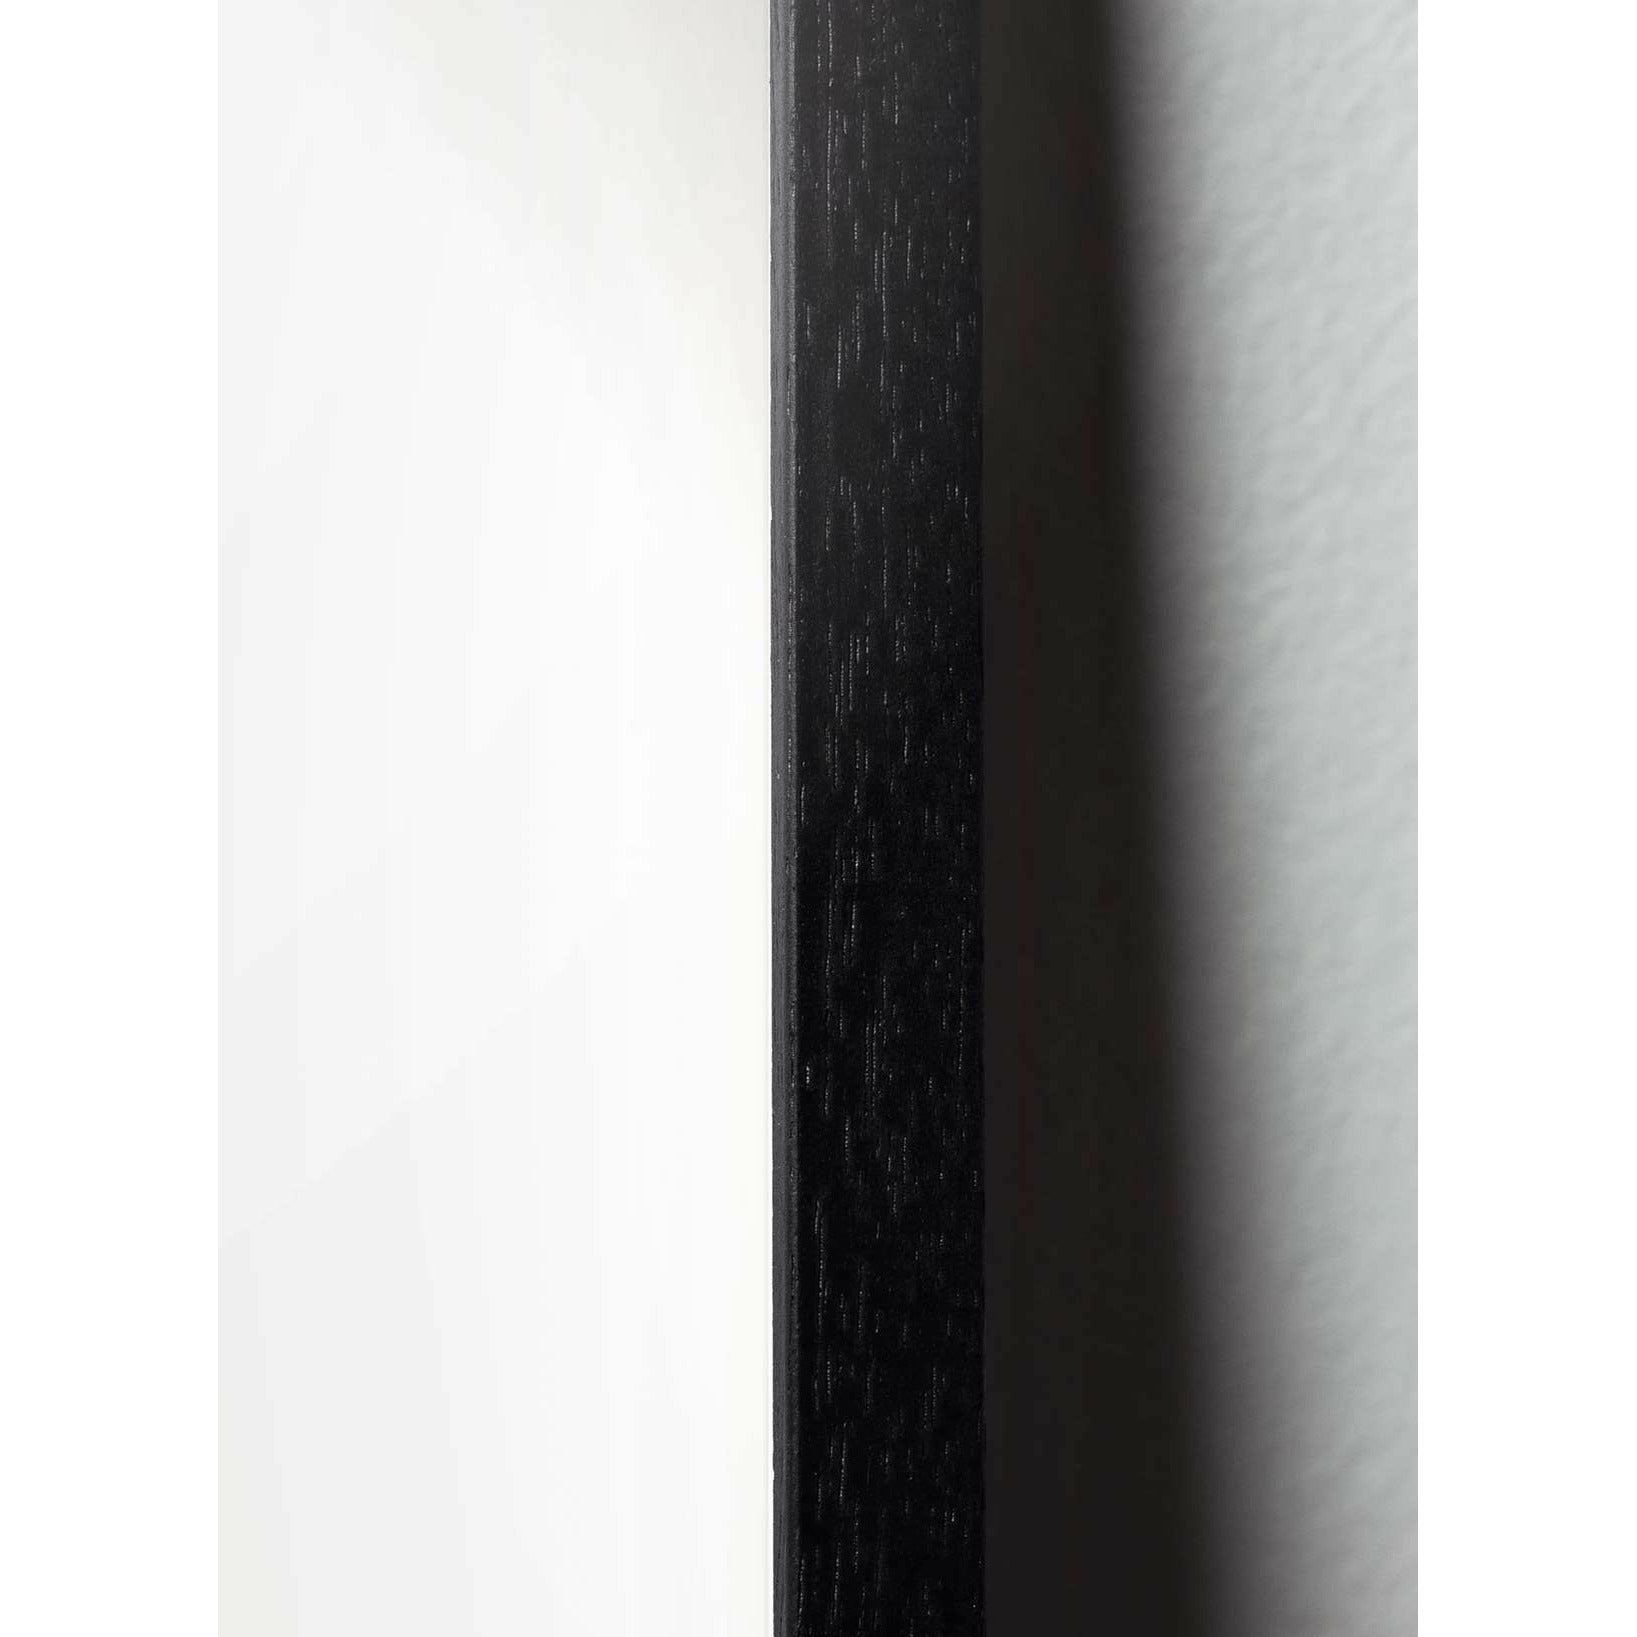 Brainchild Vintergapslinjesaffisch, ram i svart -målat trä 50x70 cm, vit bakgrund